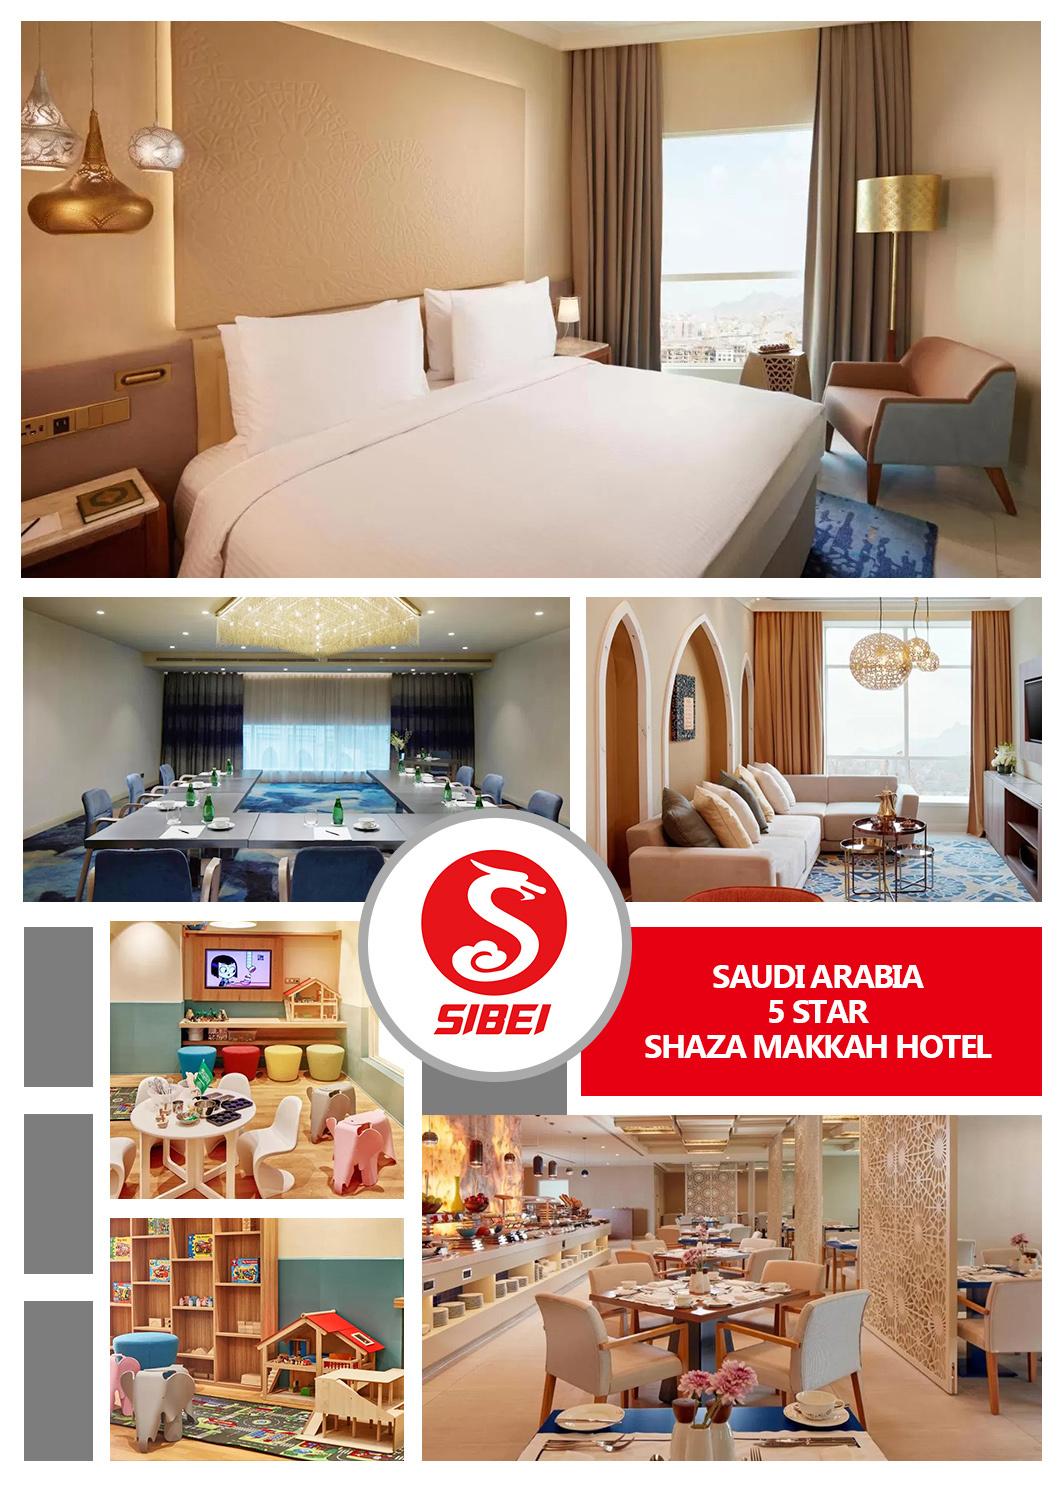 Saudi Shaza Makka Hotel Designer Like King Bed Chinese Modern Wooden Hotel Home Bedroom Living Room Sofa Furniture